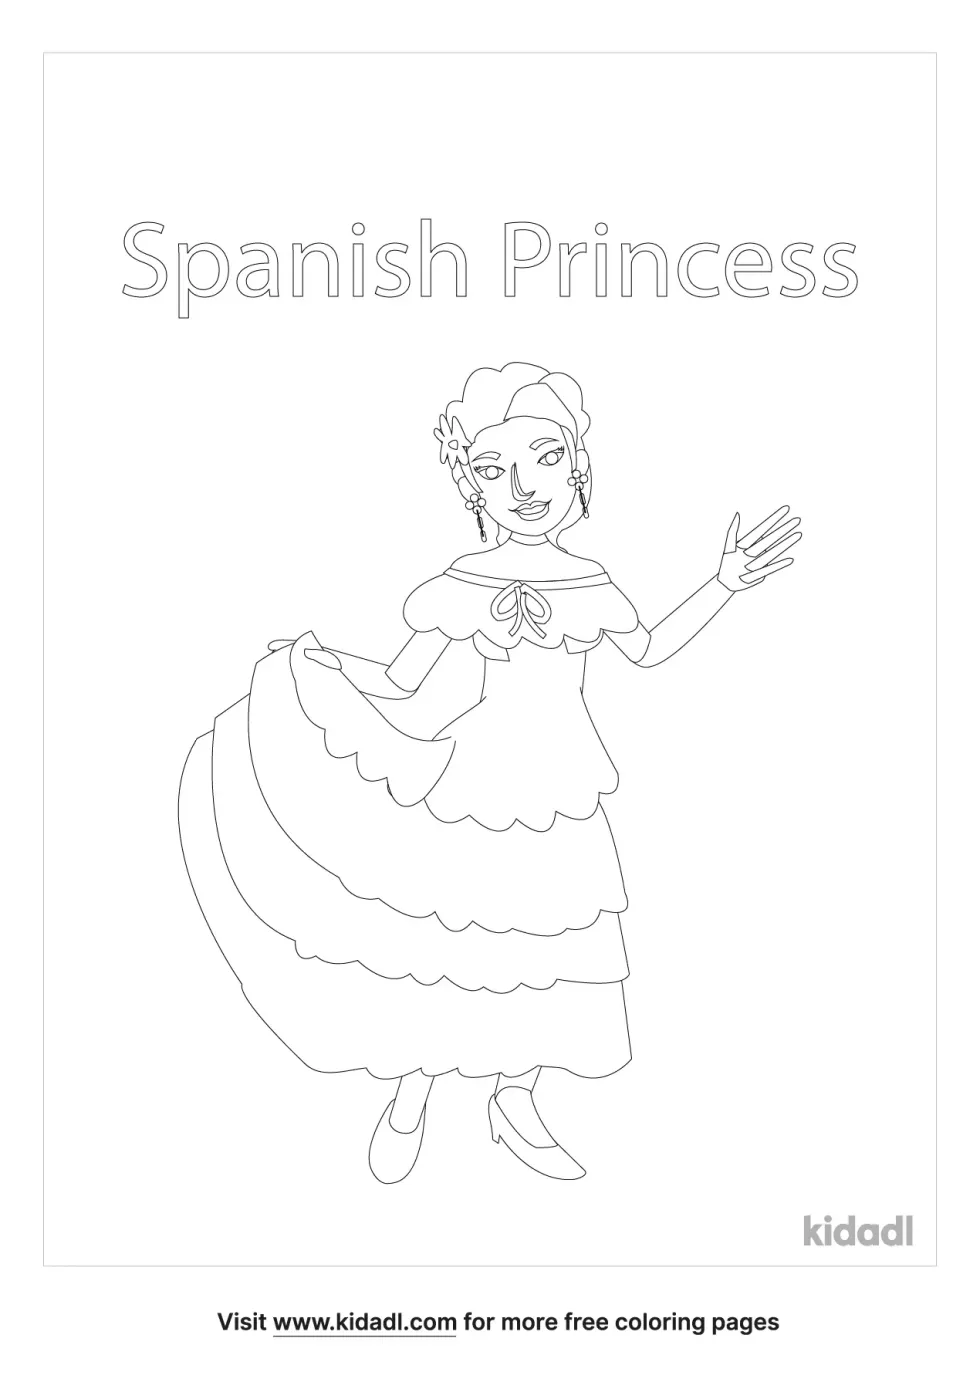 Spanish Princess Coloring Page